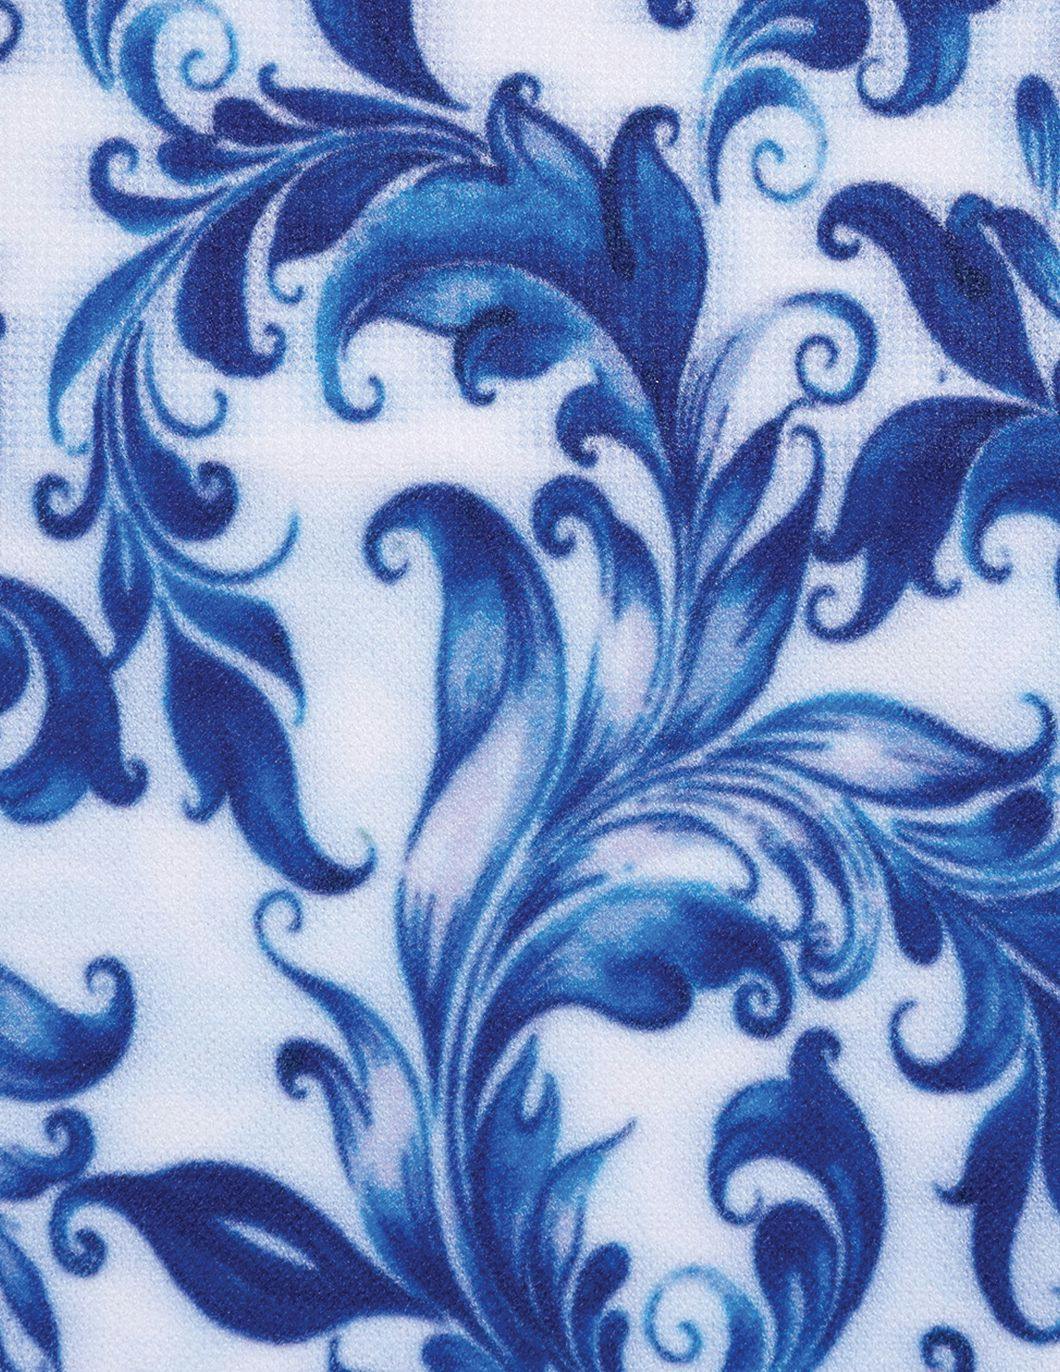 cutieful-compression-socks-blue-watercolor-flowers-print-alt